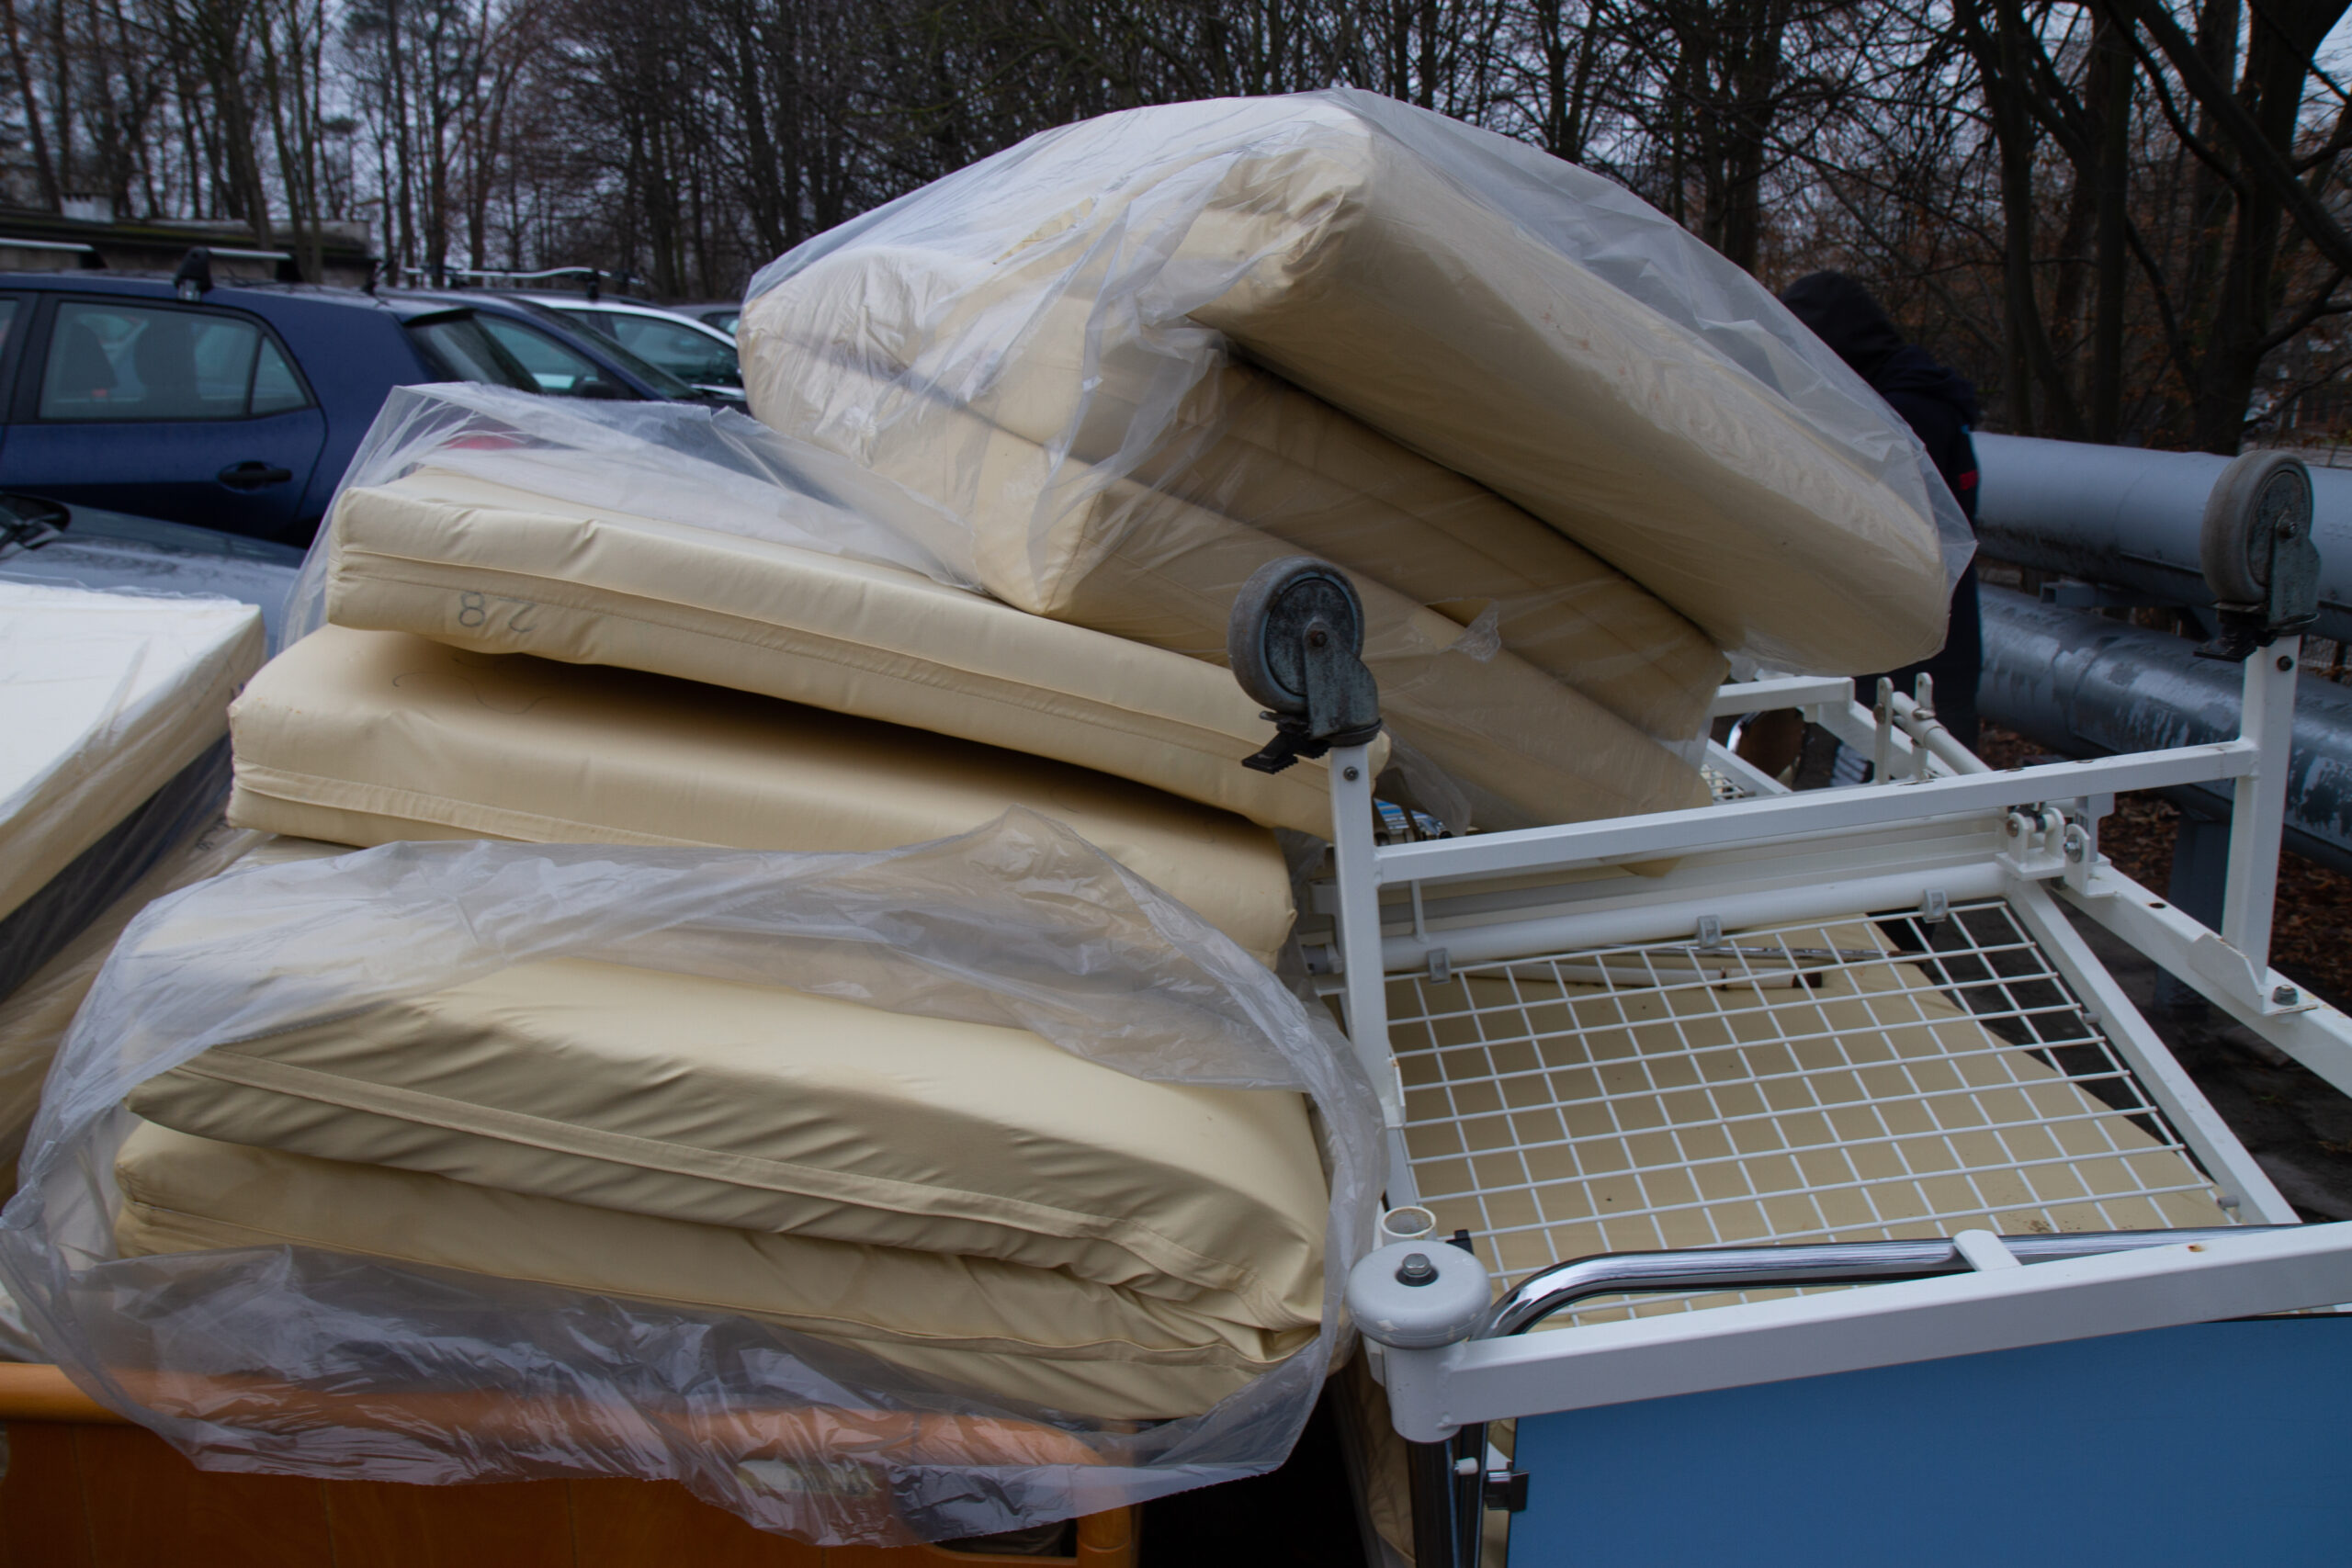 Łóżka i materace ze Szpitali Pomorskich trafią do Ukrainy. To kolejna pomoc z Pomorza